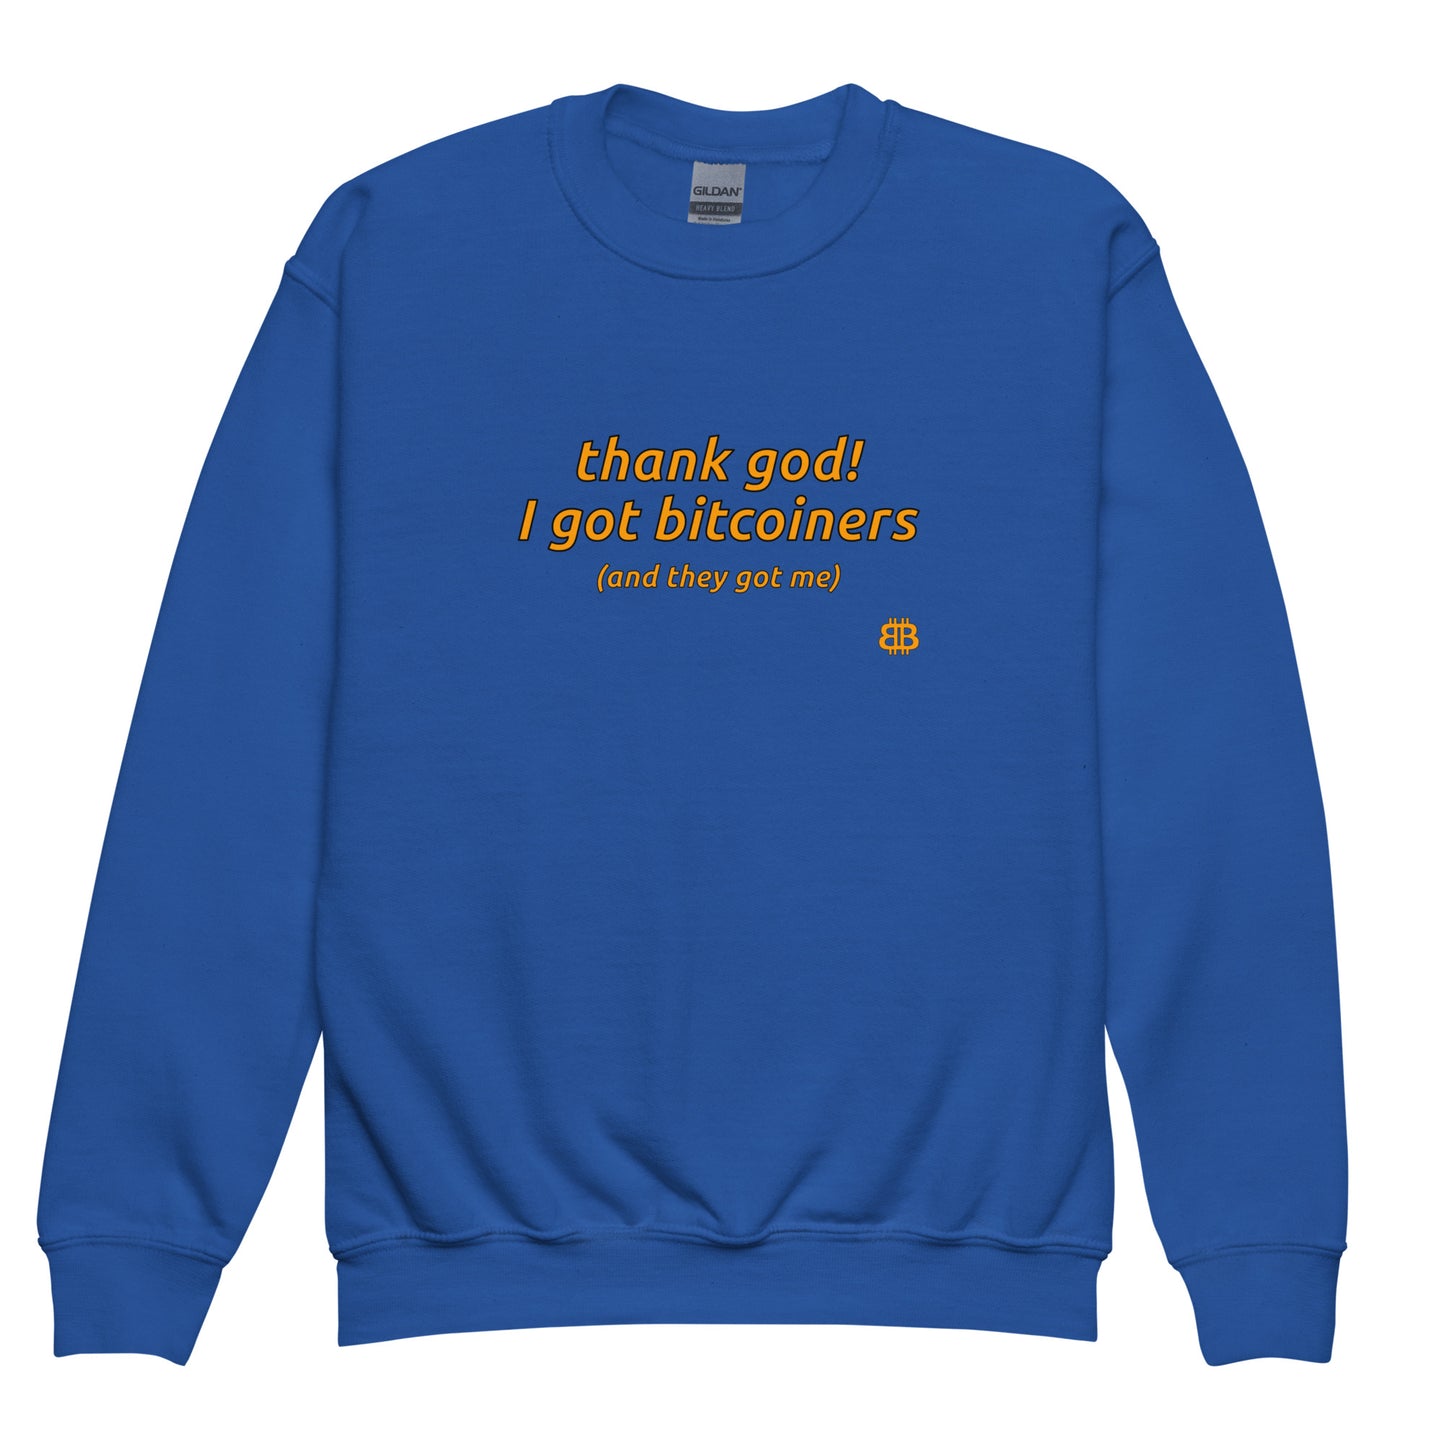 Youth crewneck sweatshirt "ThankGod"